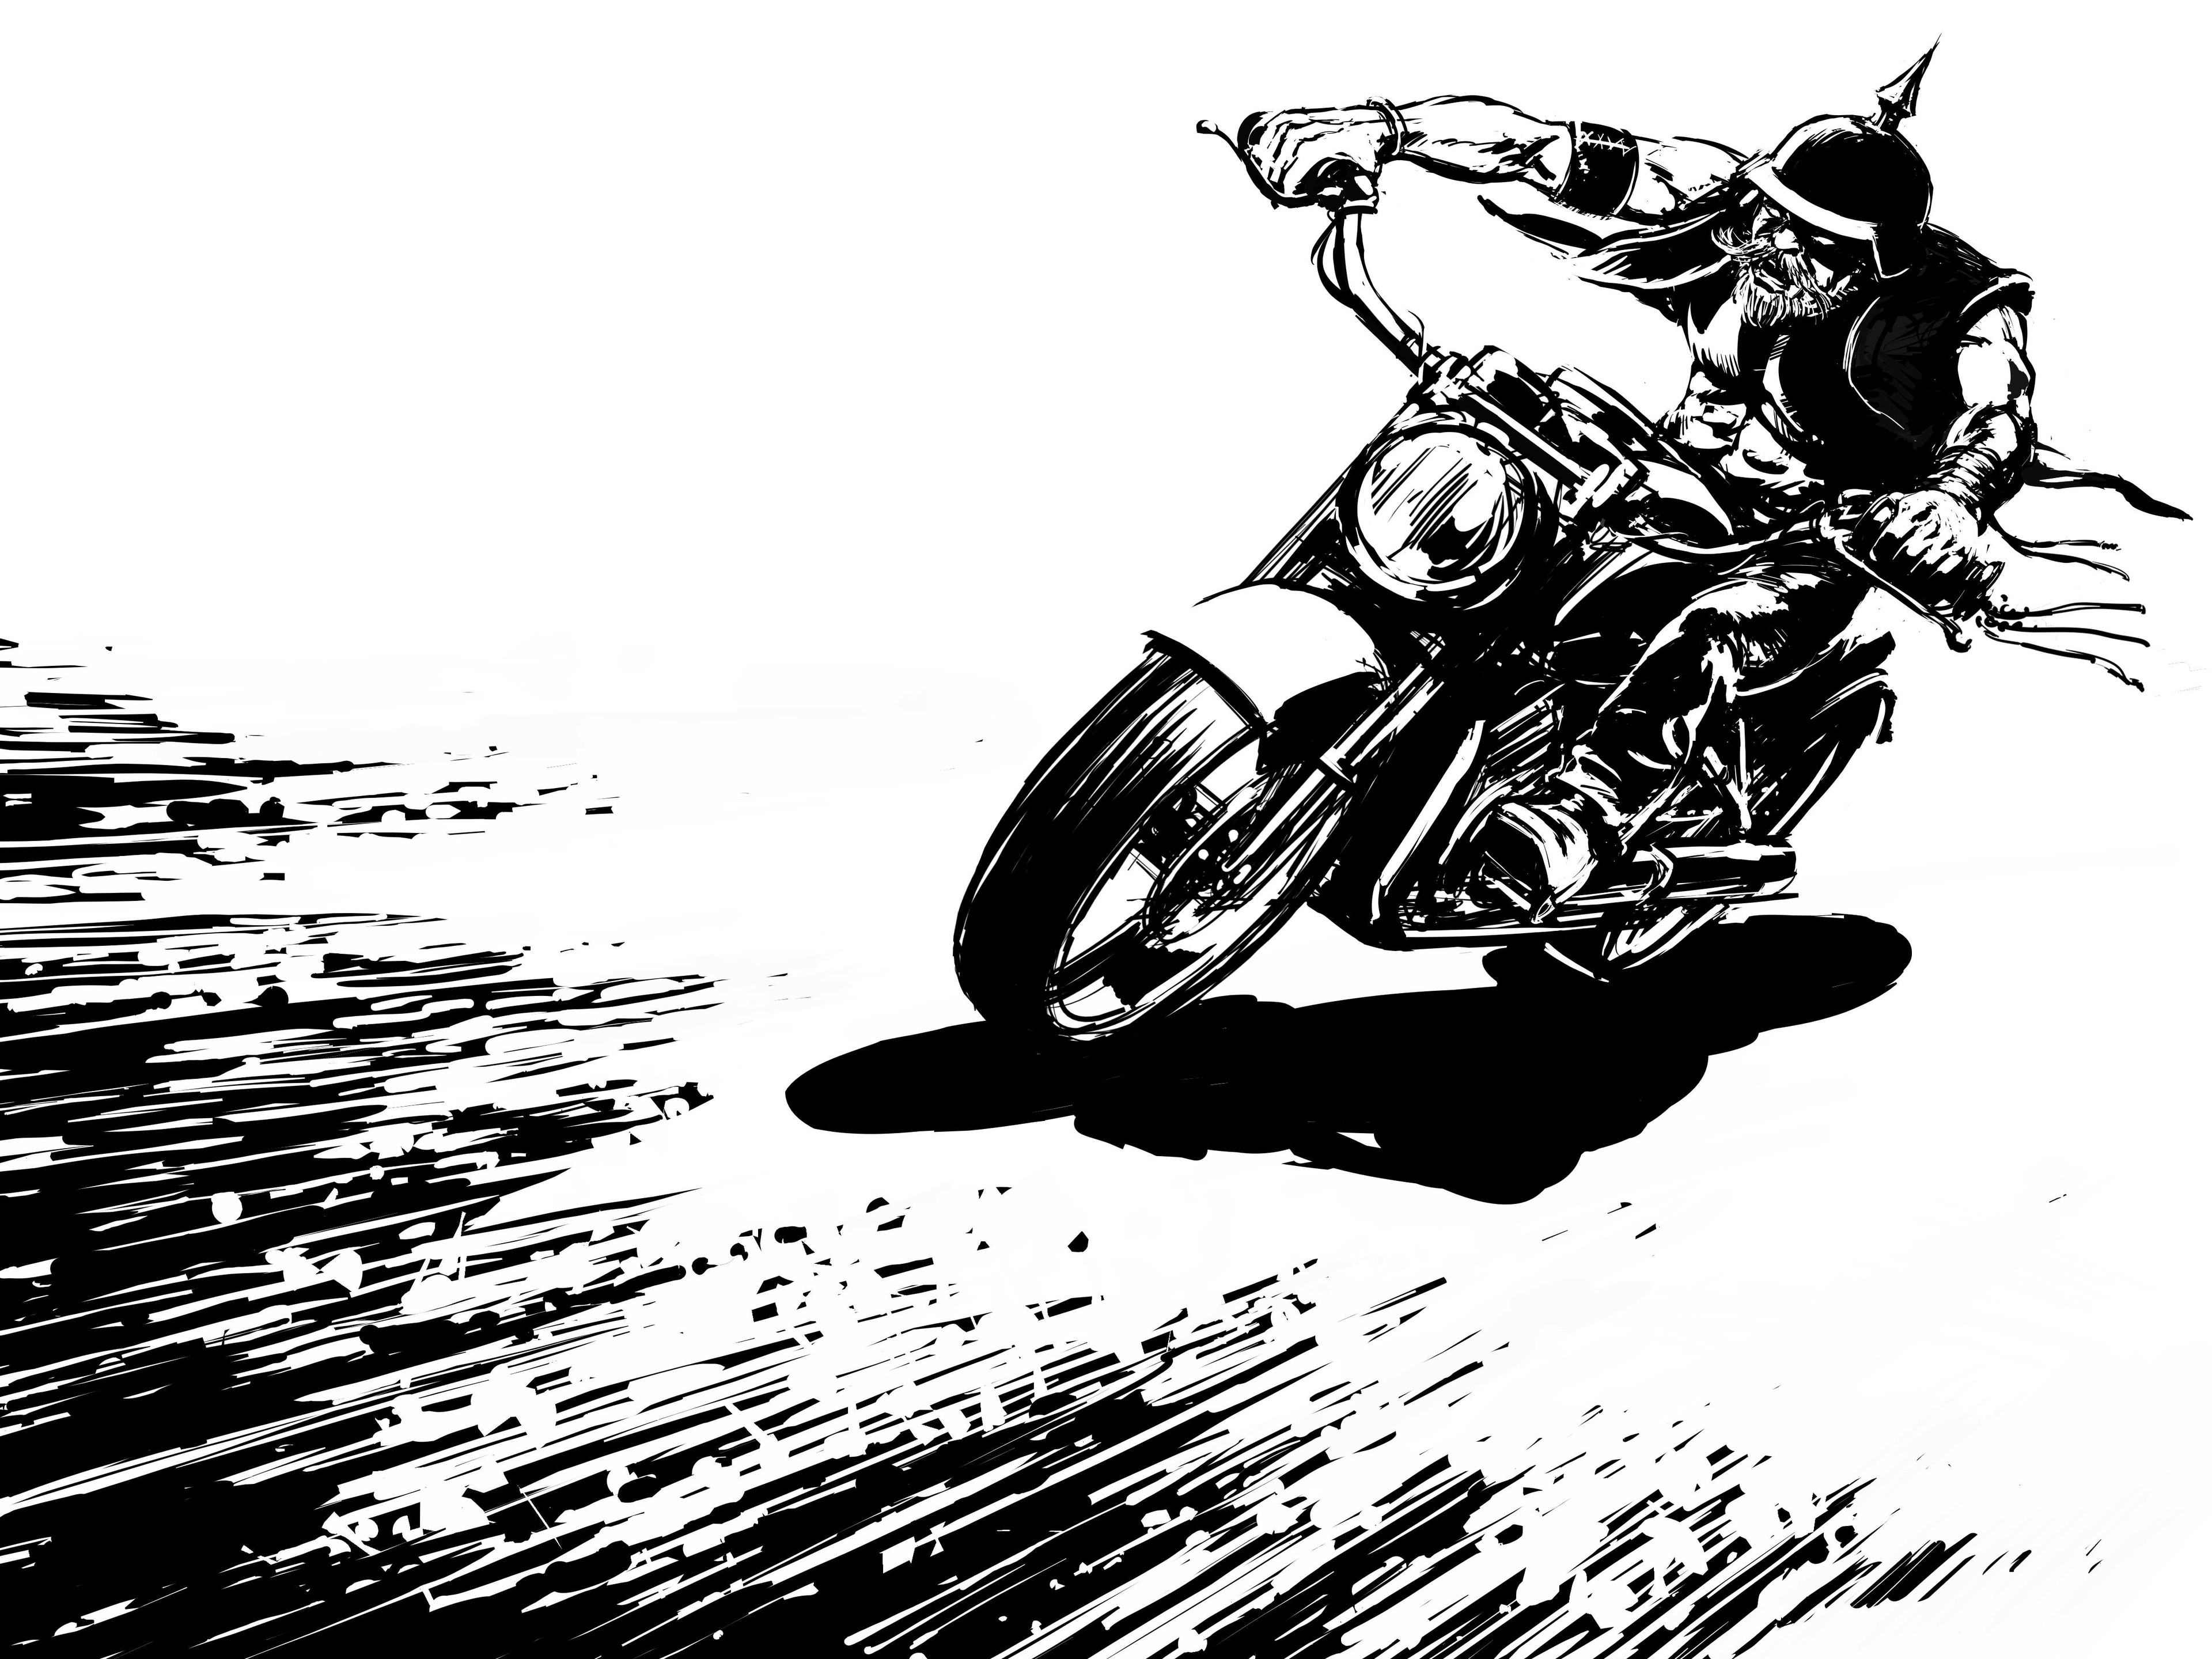 The Harleyman par Delagachette